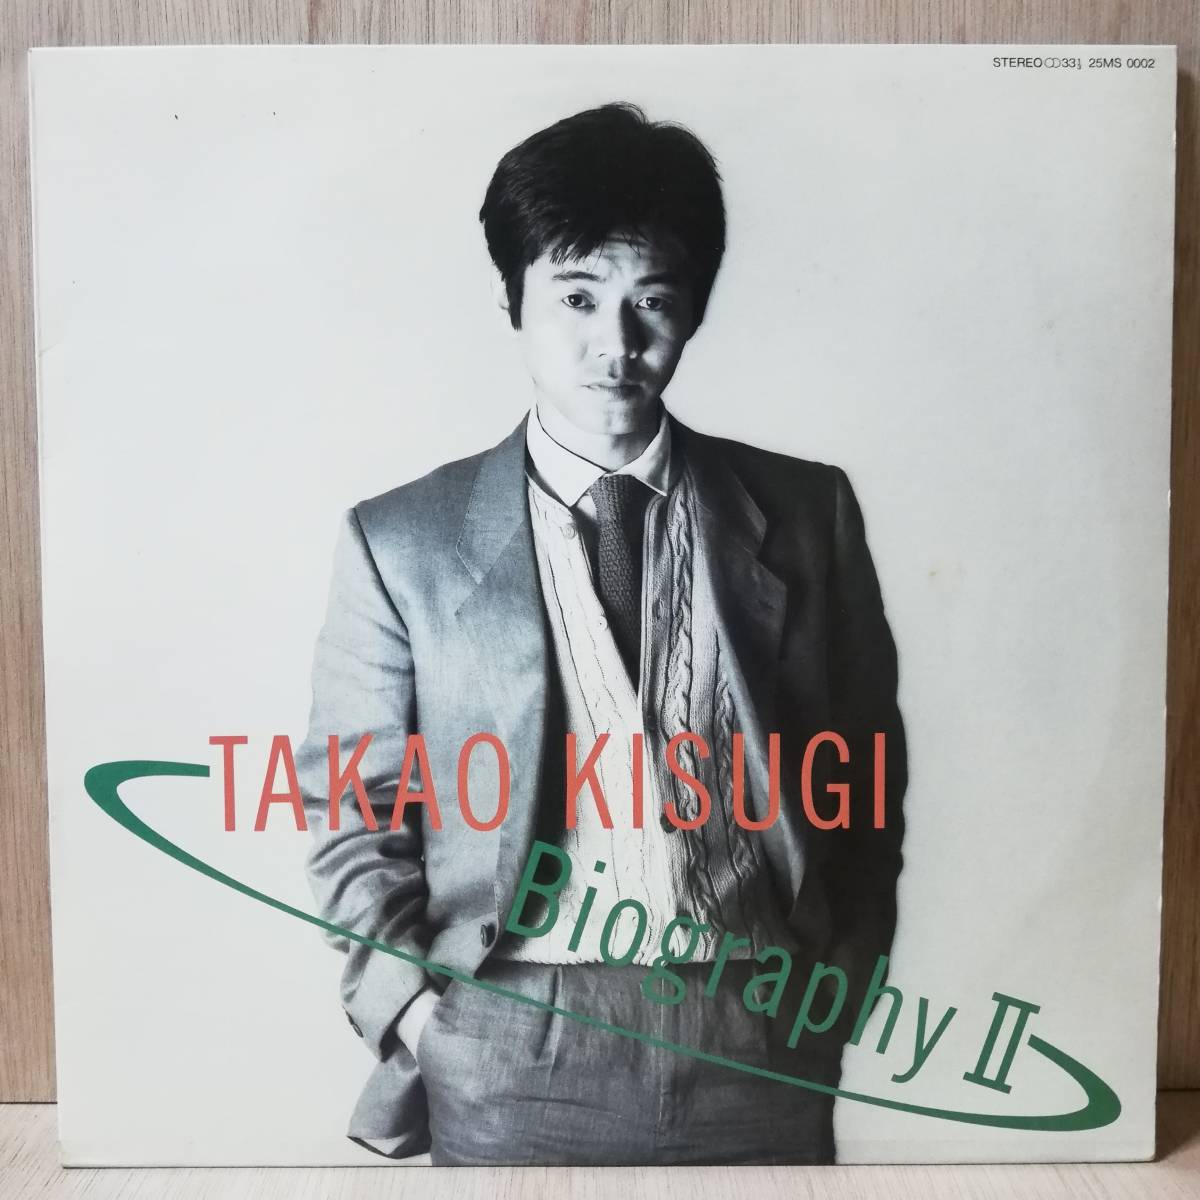 【LP】来生たかお Takao Kisugi Biography II - 25MS 0002 - *13の画像1